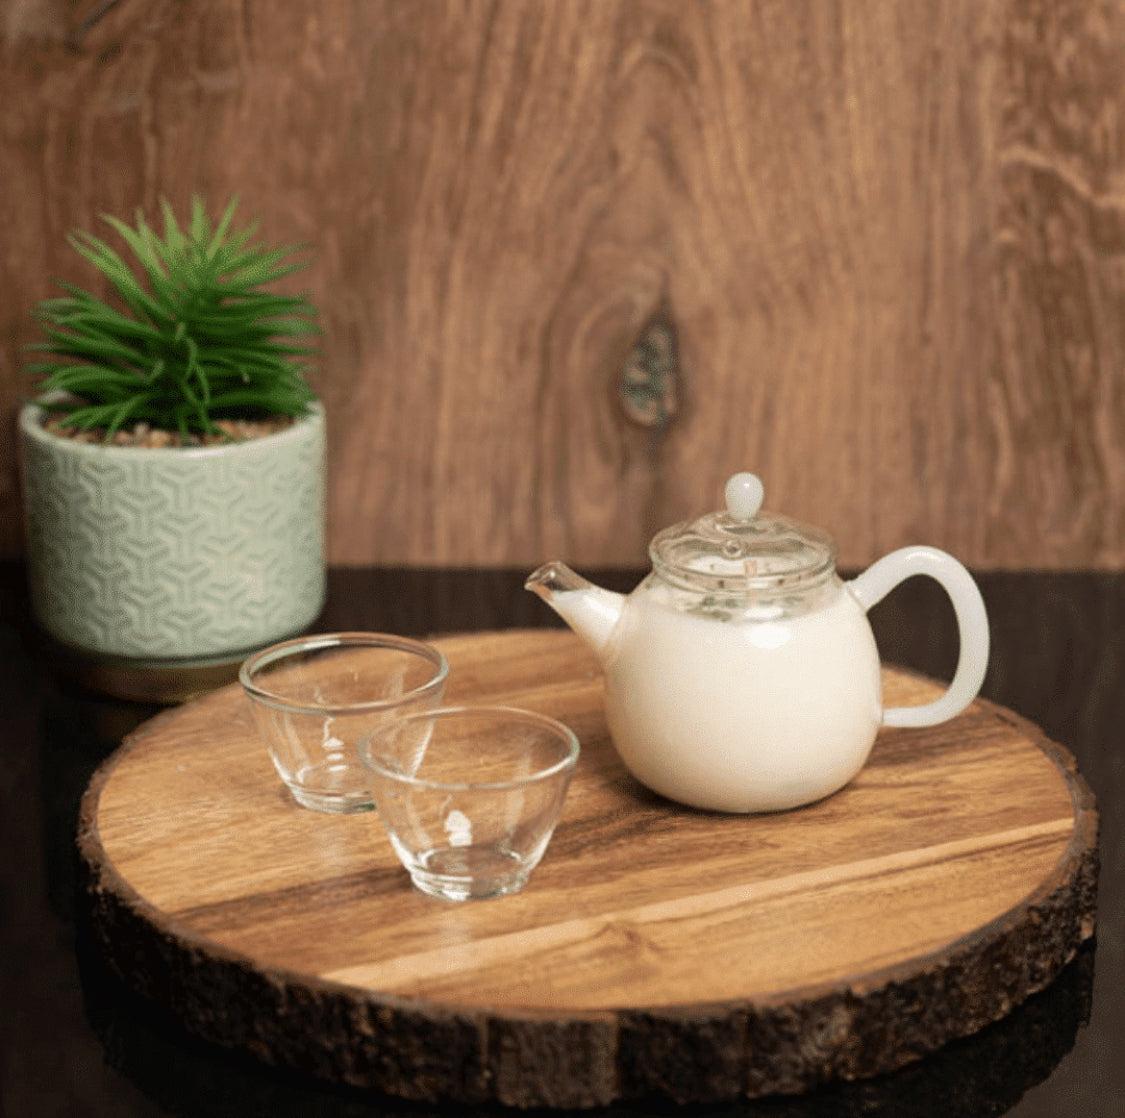 Soy Candle - Glass Tea Set